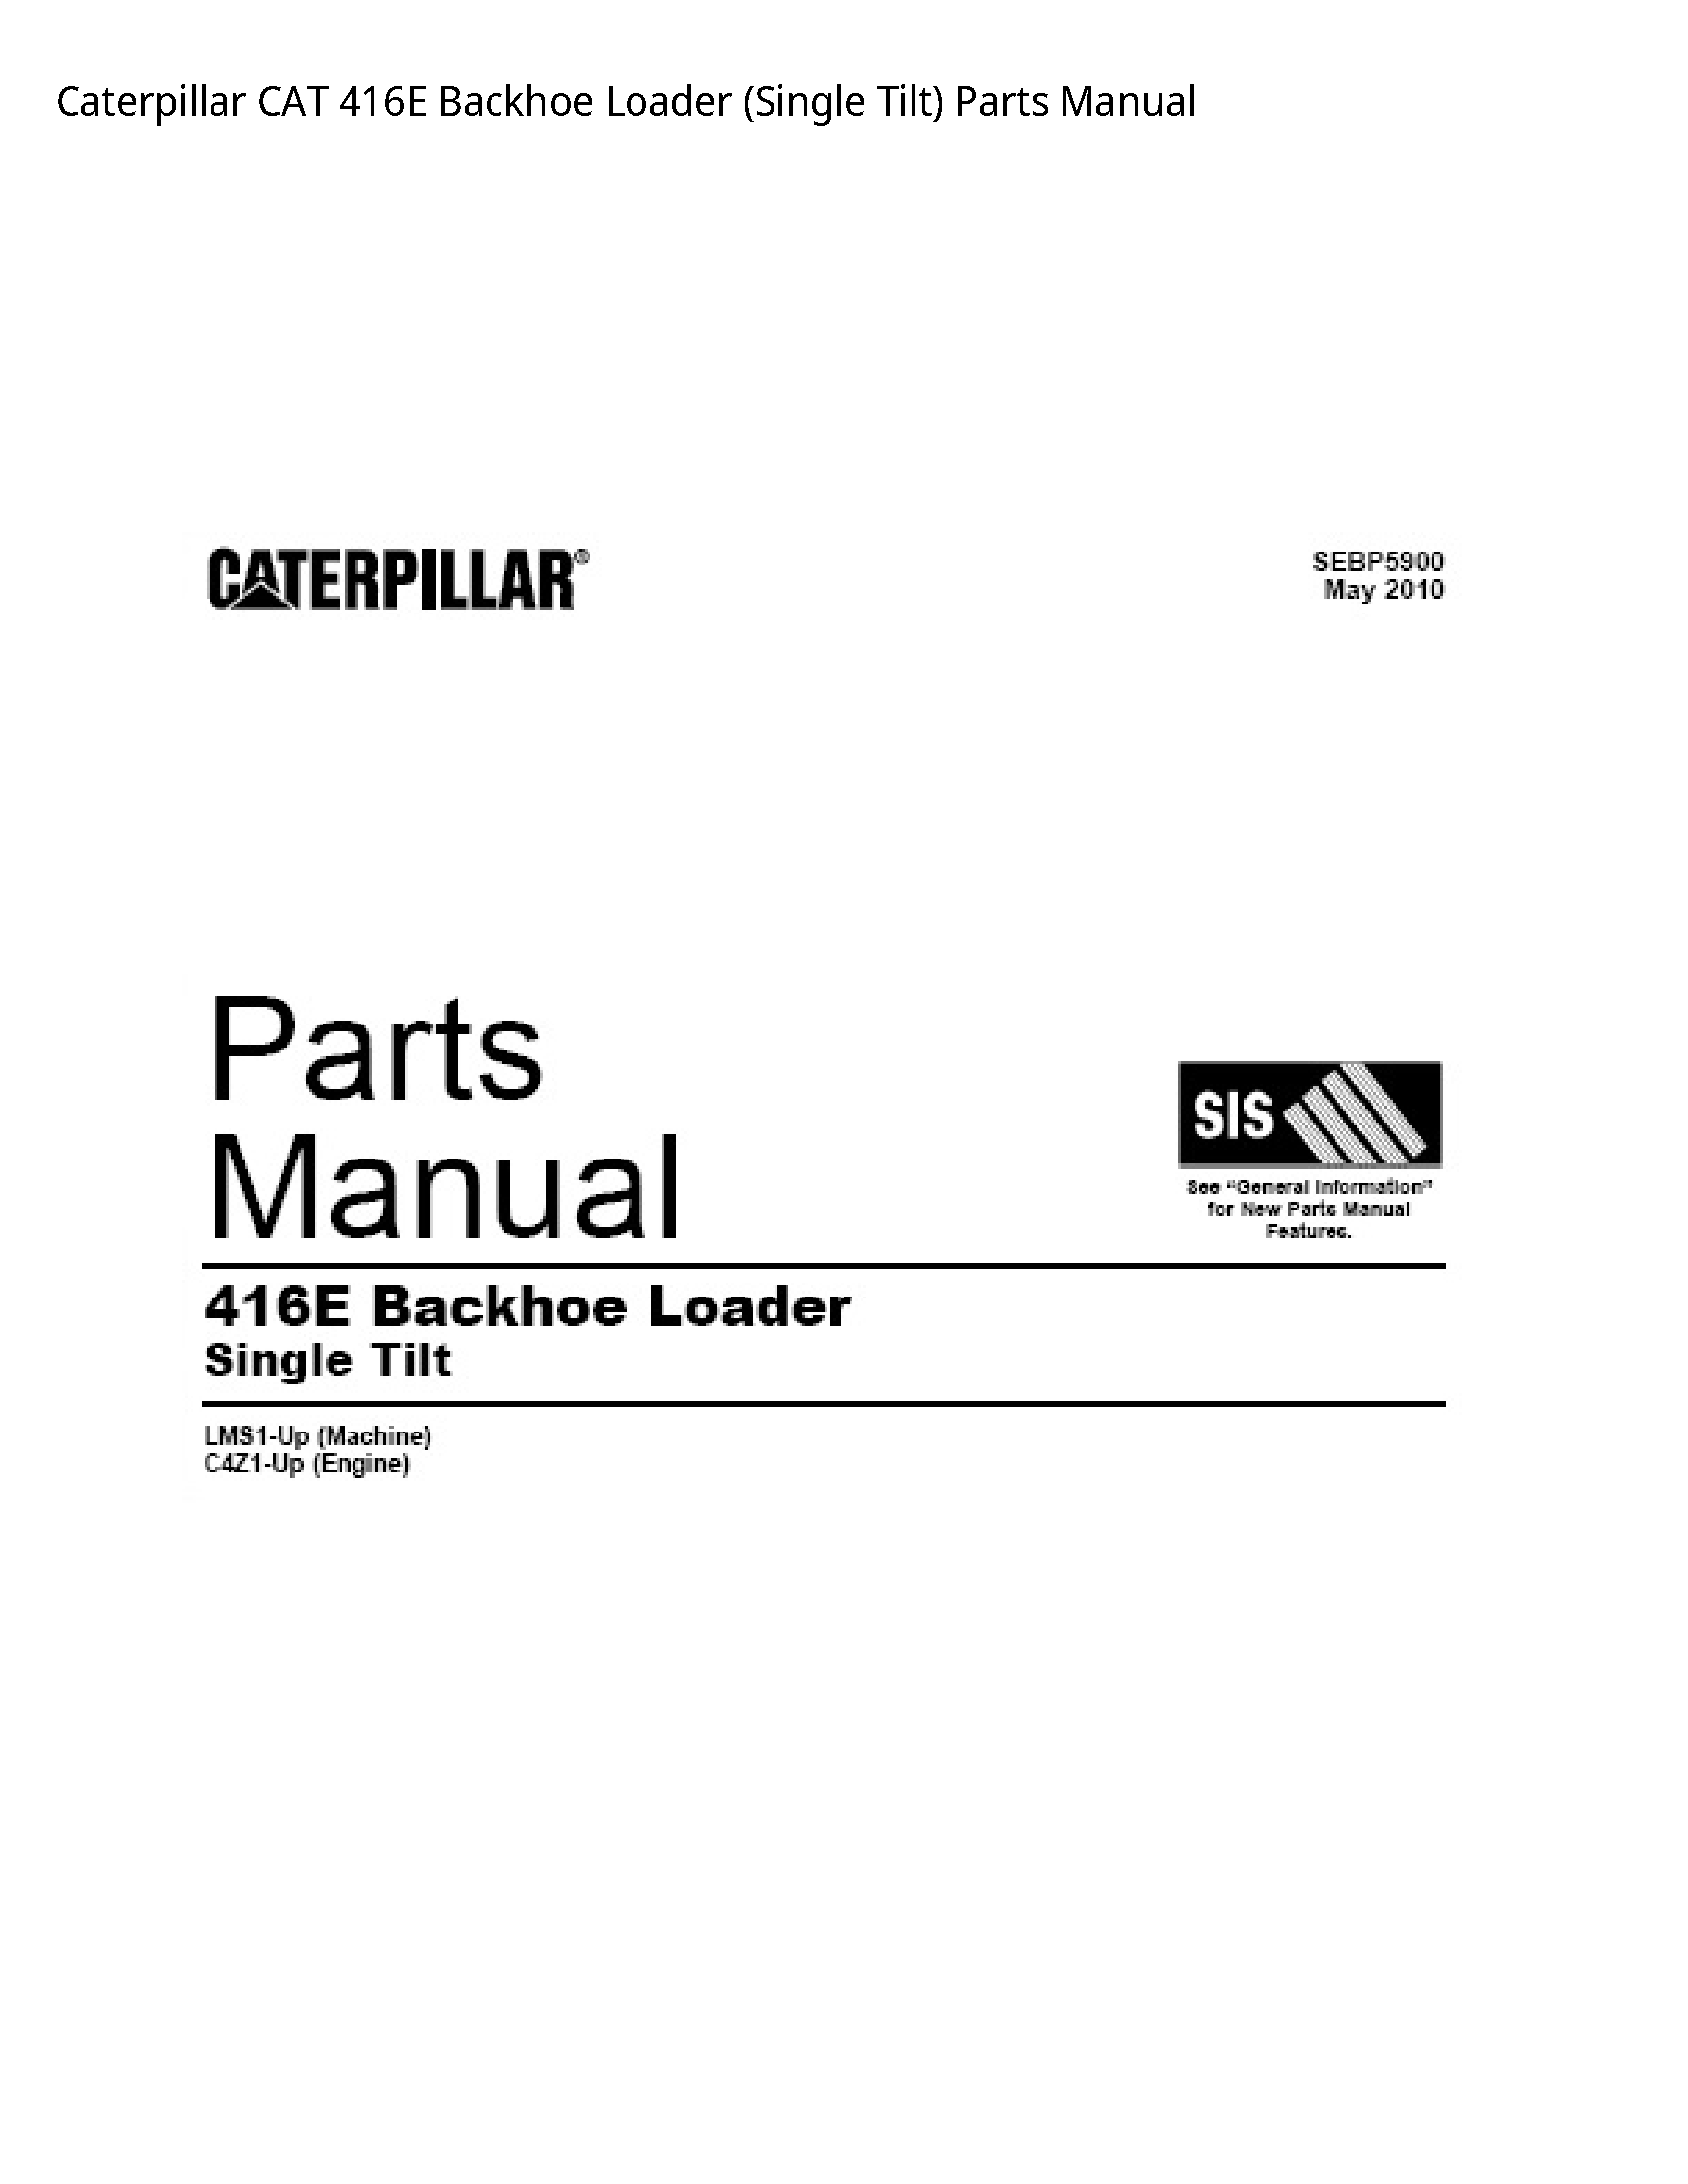 Caterpillar 416E CAT Backhoe Loader (Single Tilt) Parts manual